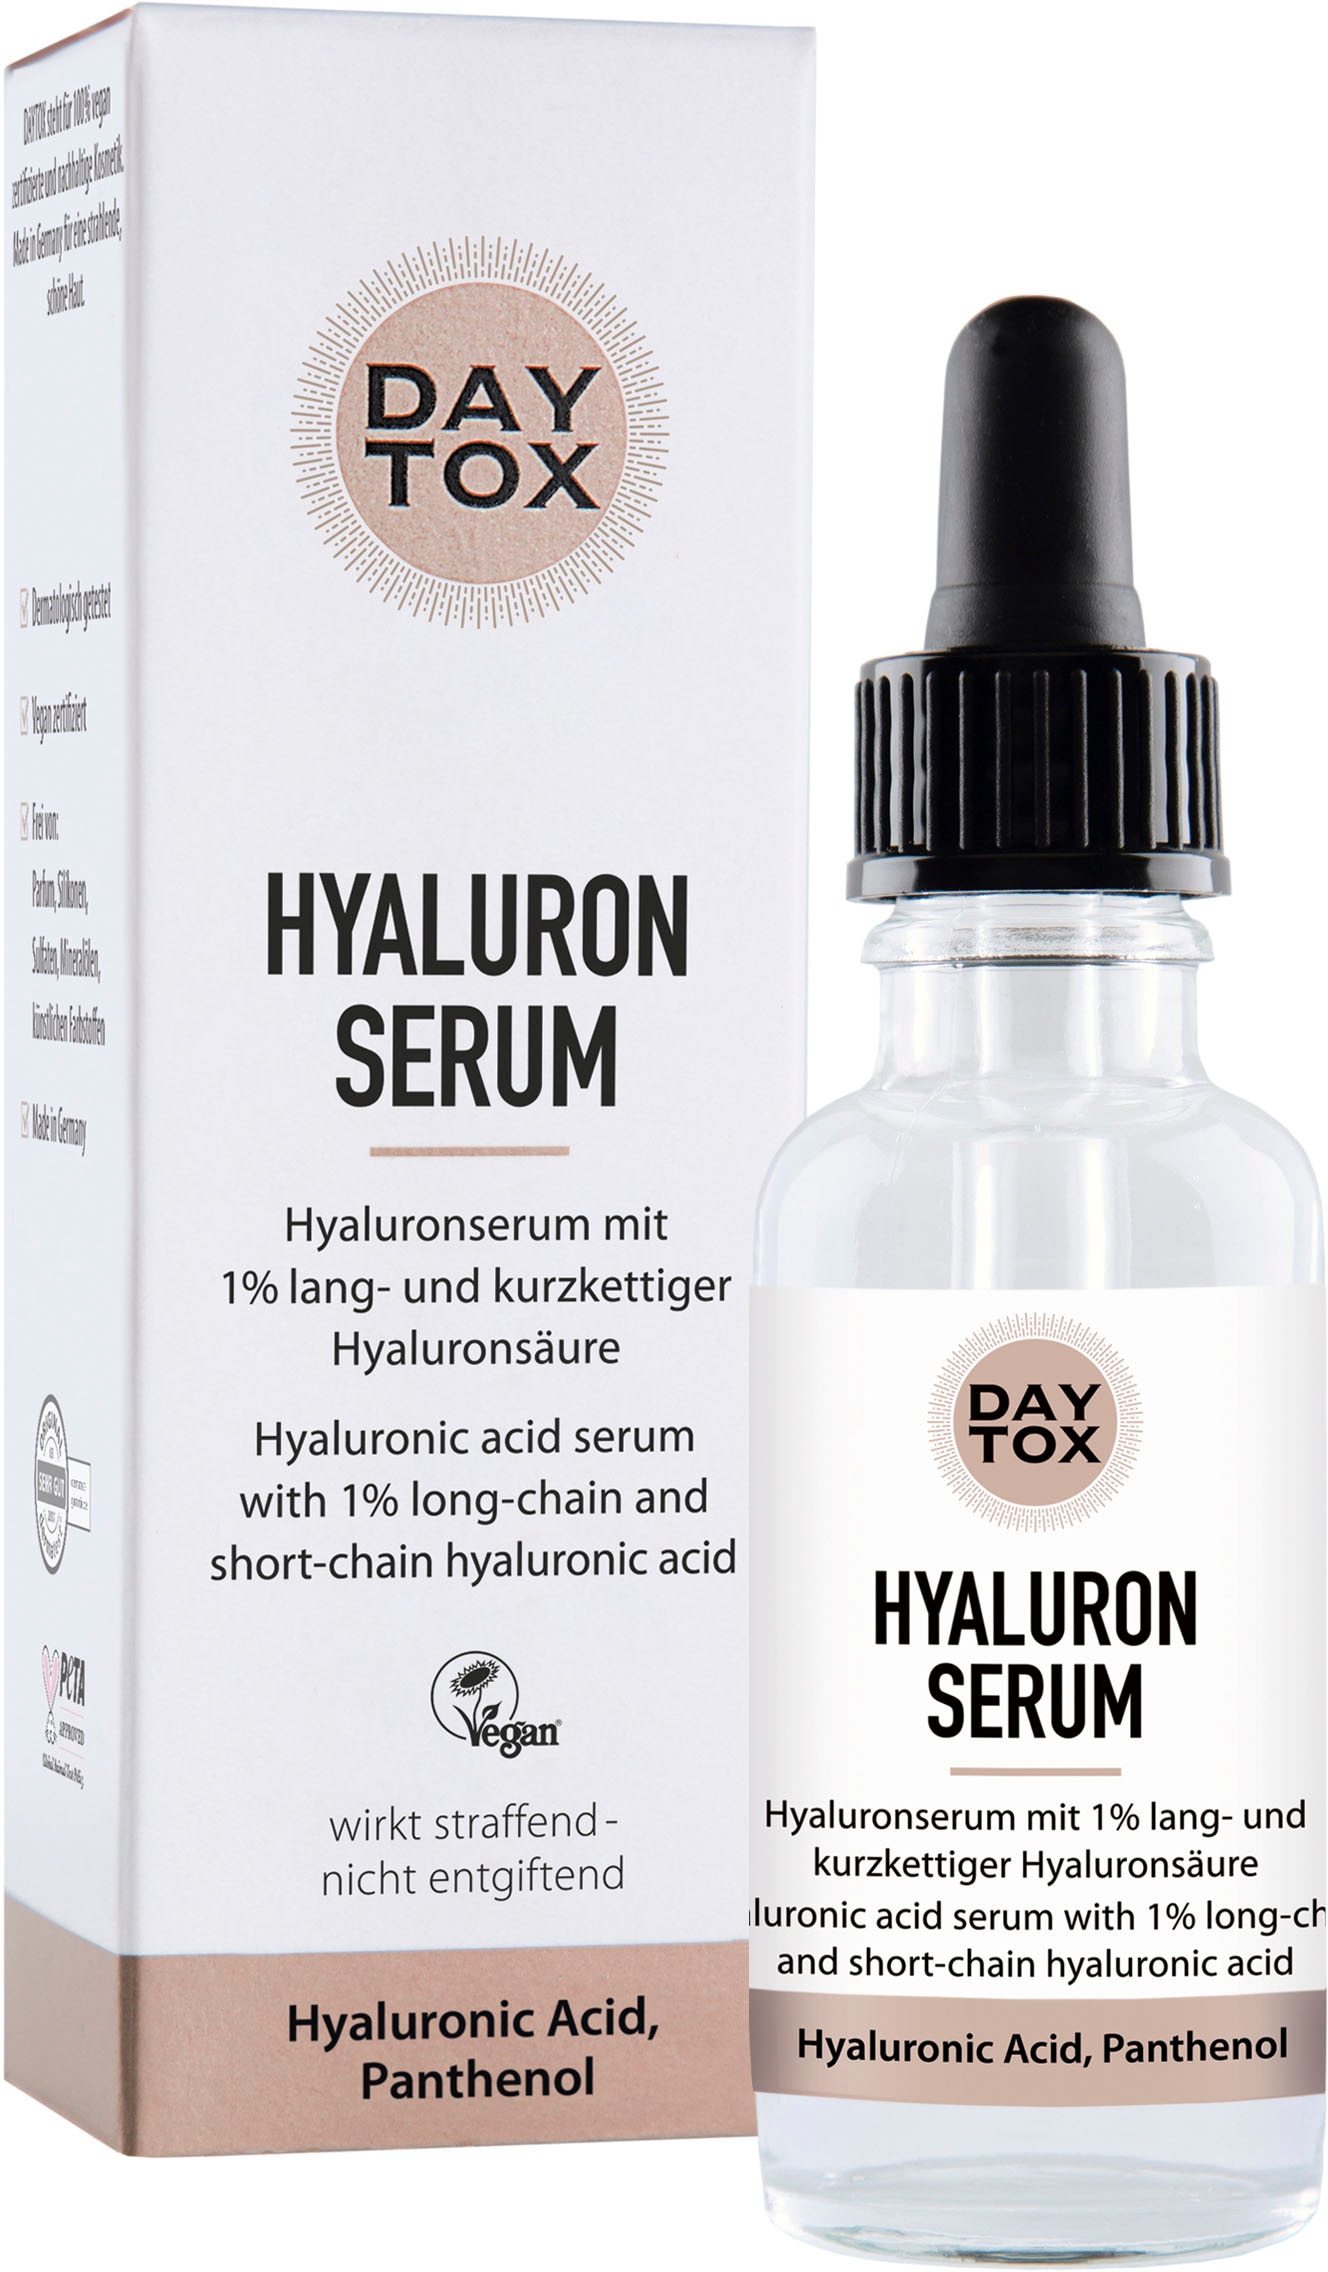 DAYTOX Hyaluron Serum